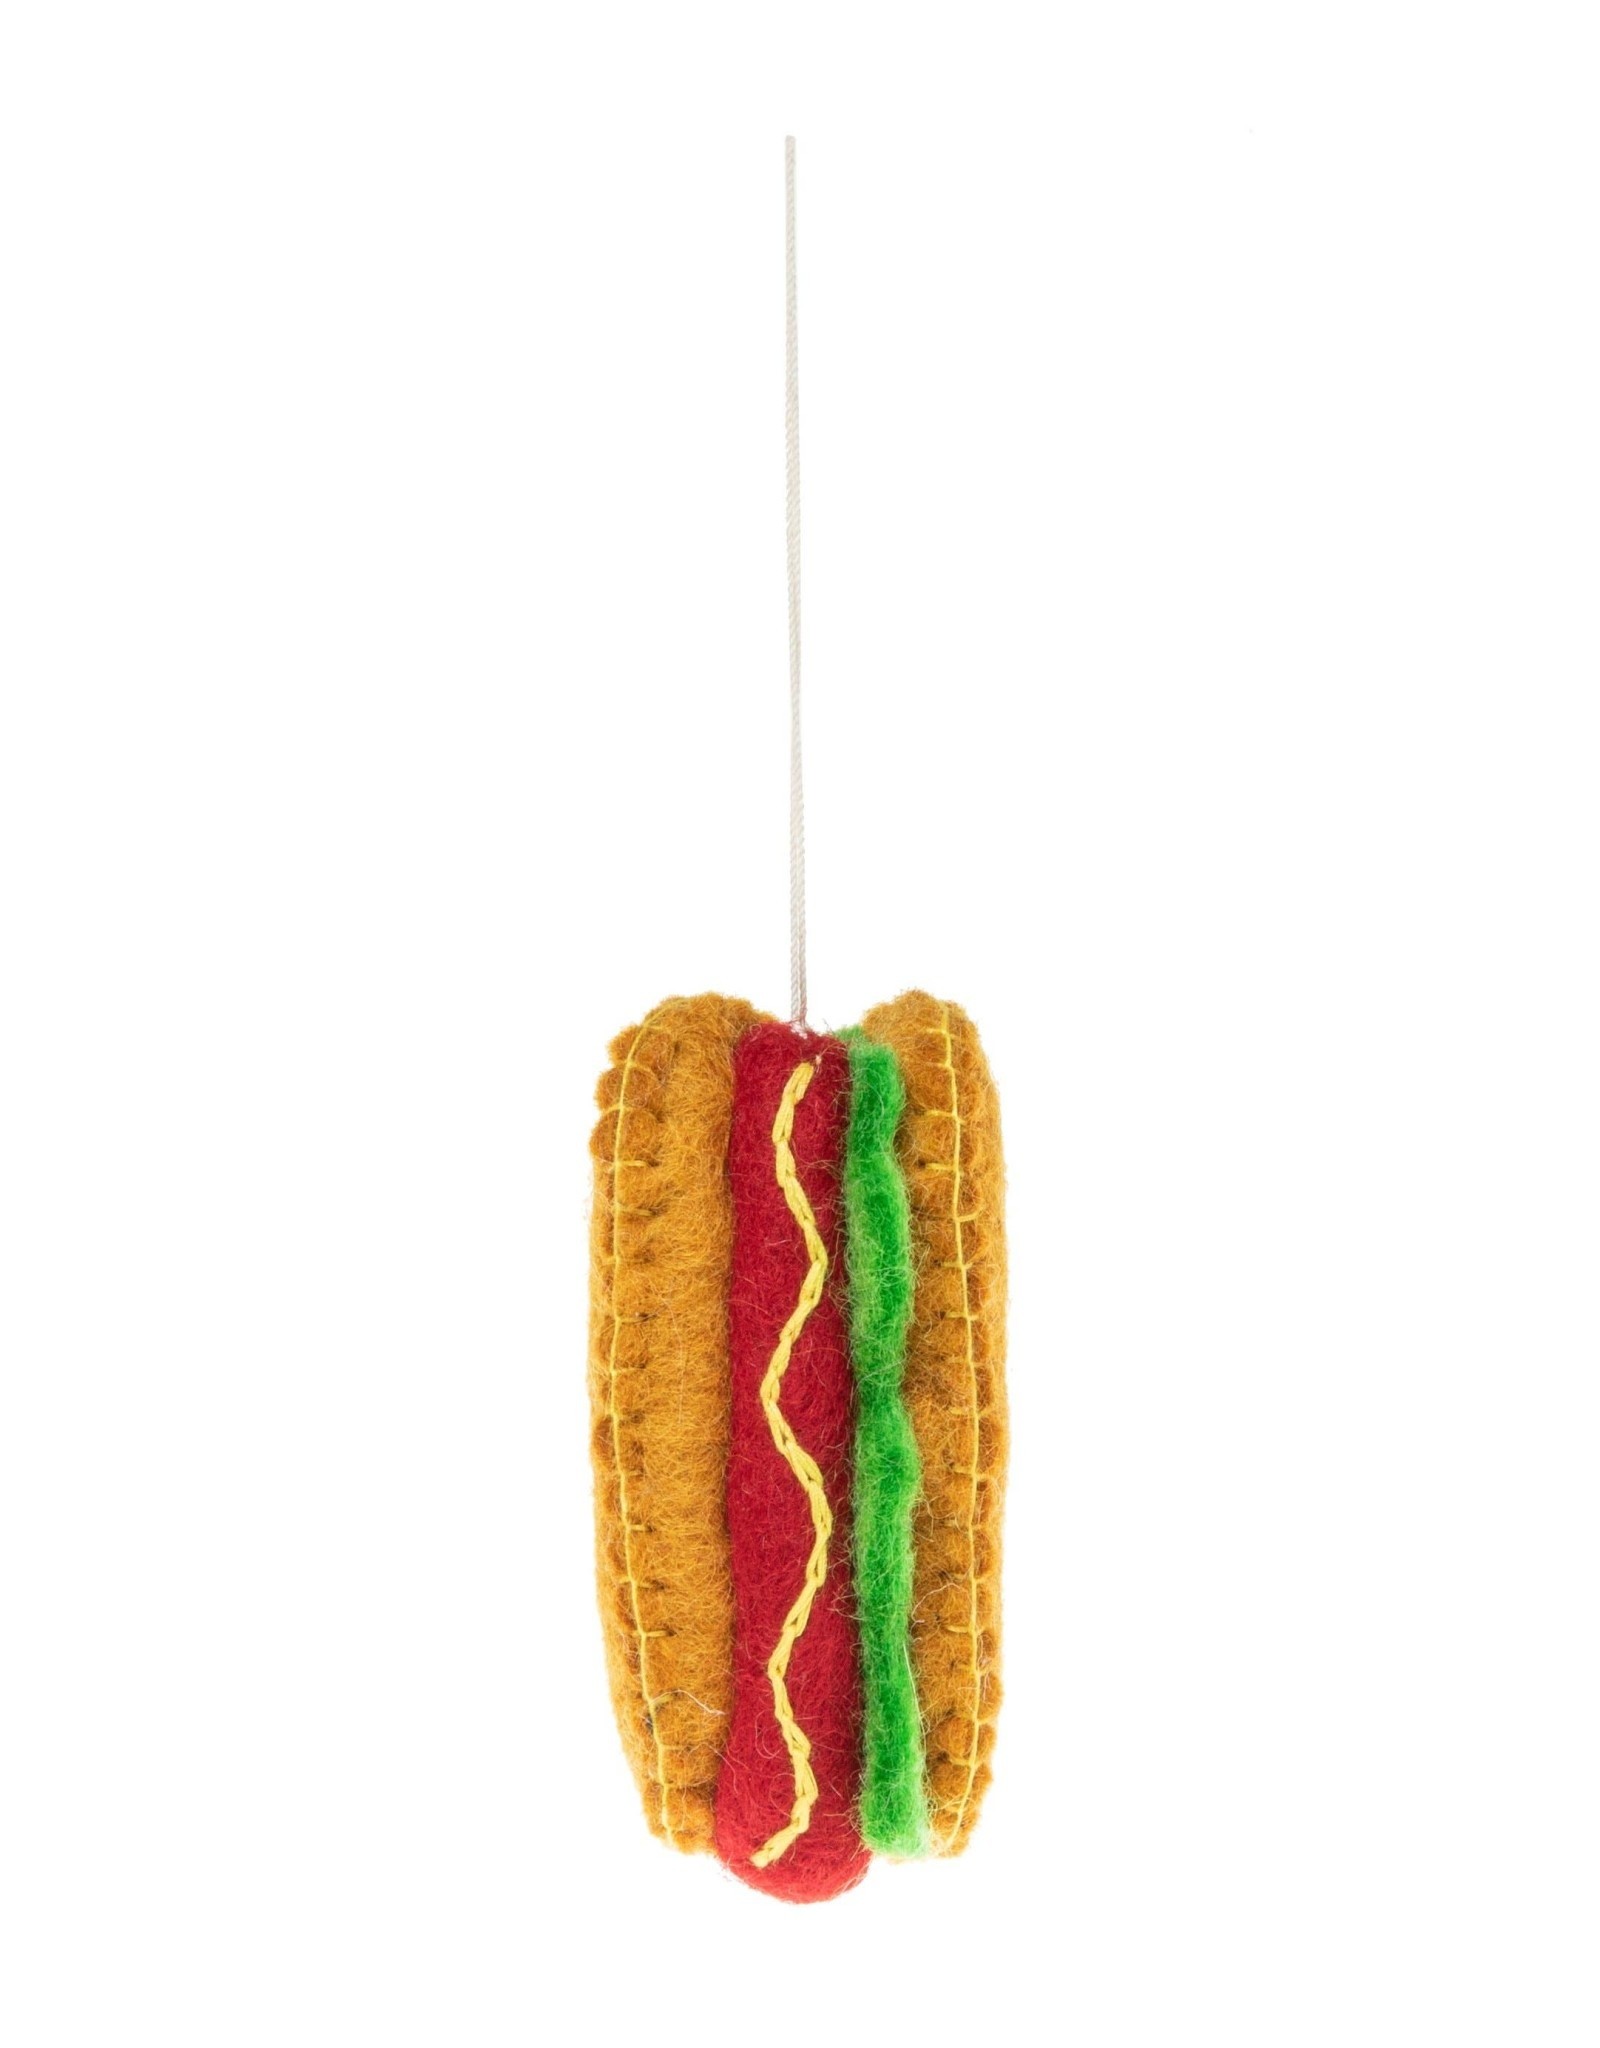 Global Goods Partners Hot Dog Felted Ornament